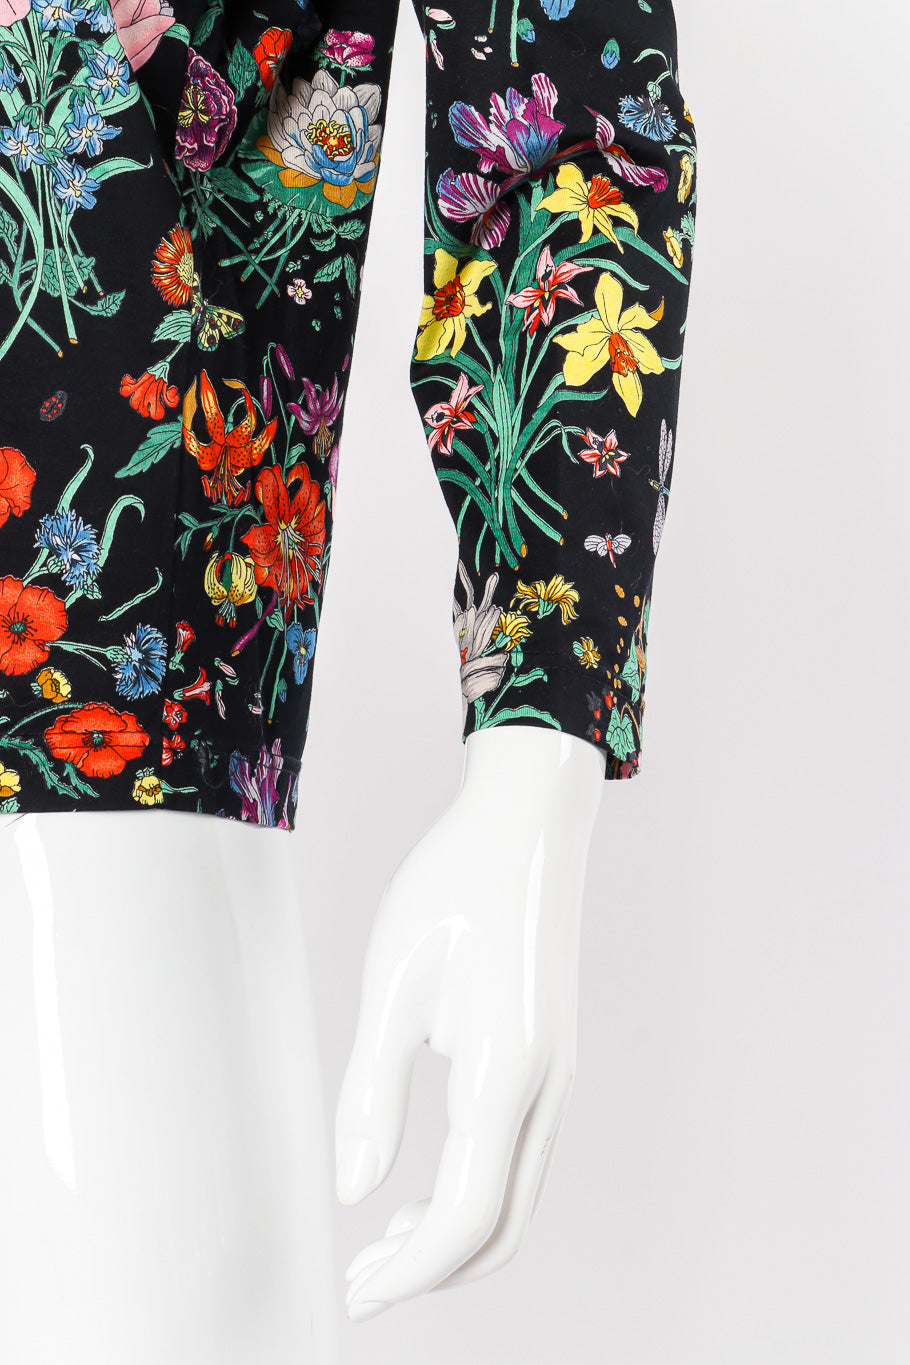 Vintage Gucci Botanical Motif Top sleeve on mannequin closeup @Recessla